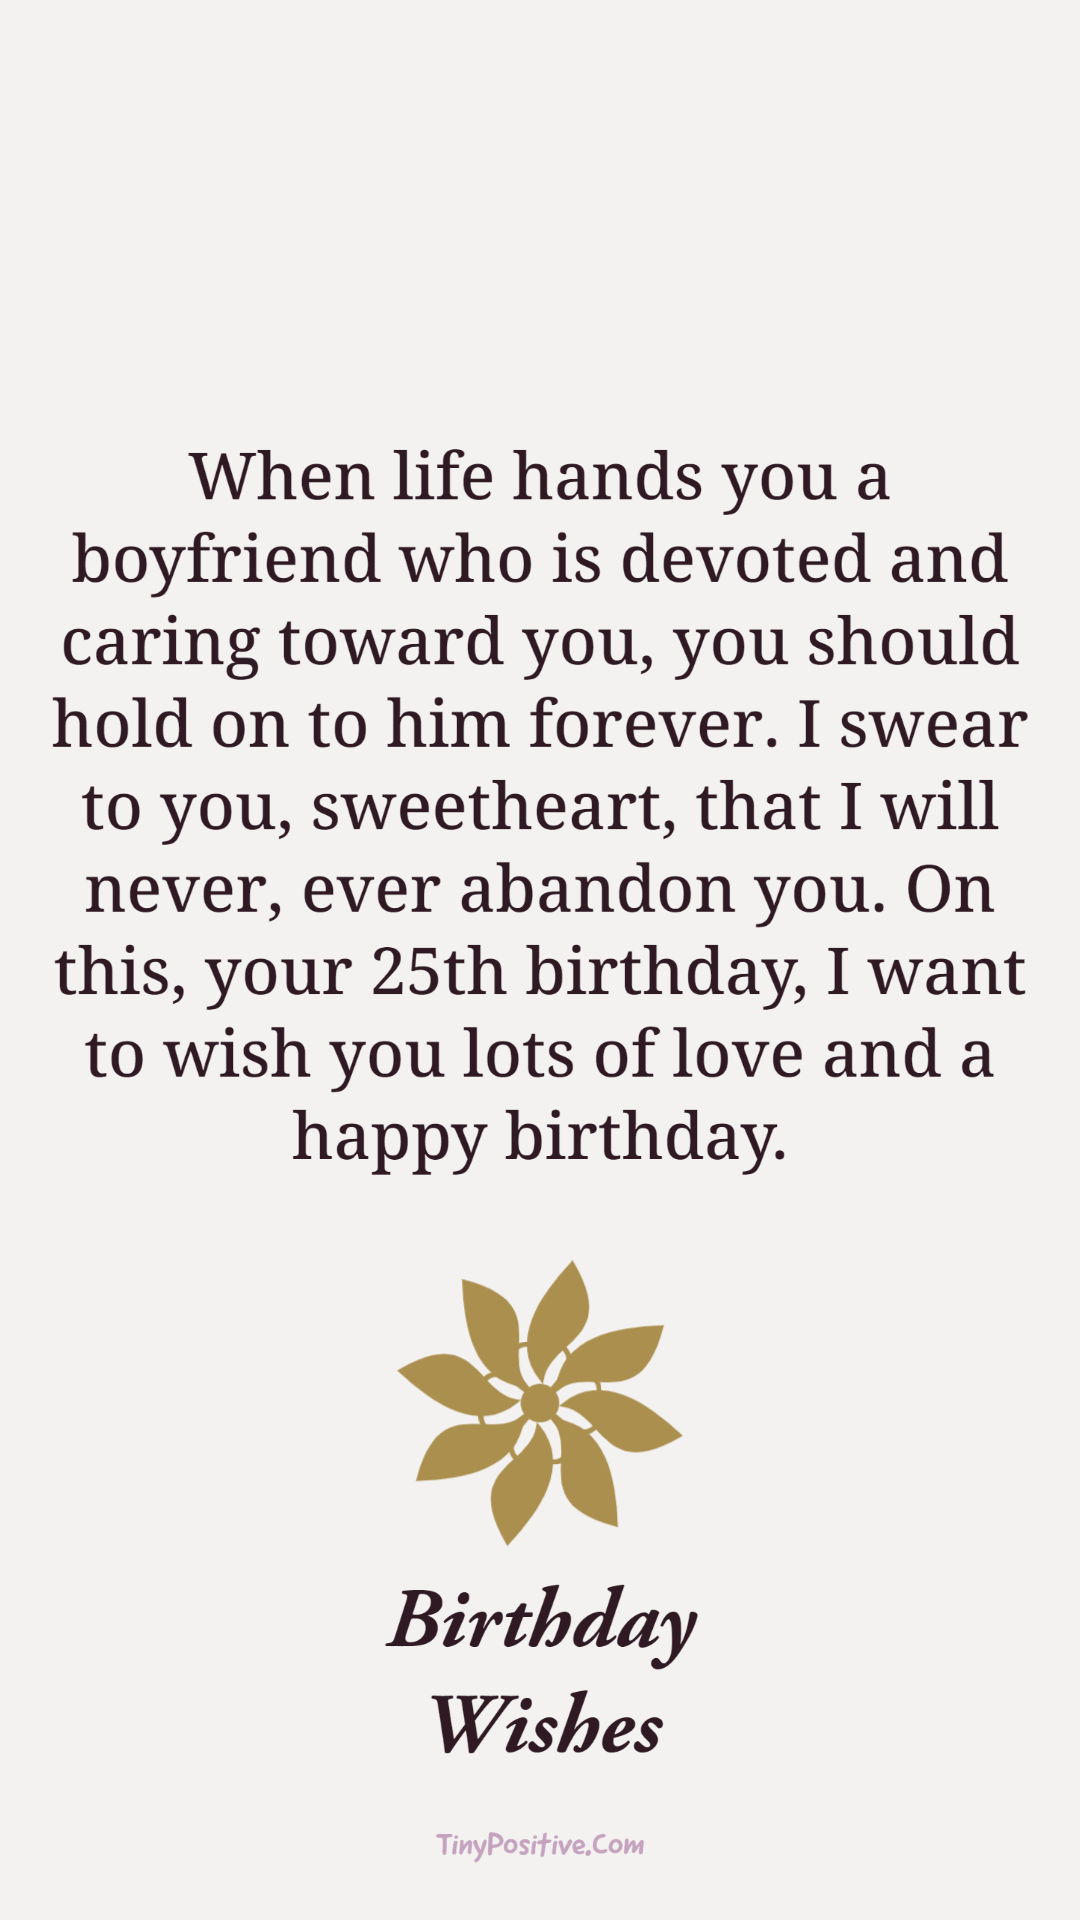 how do you wish a heartfelt birthday